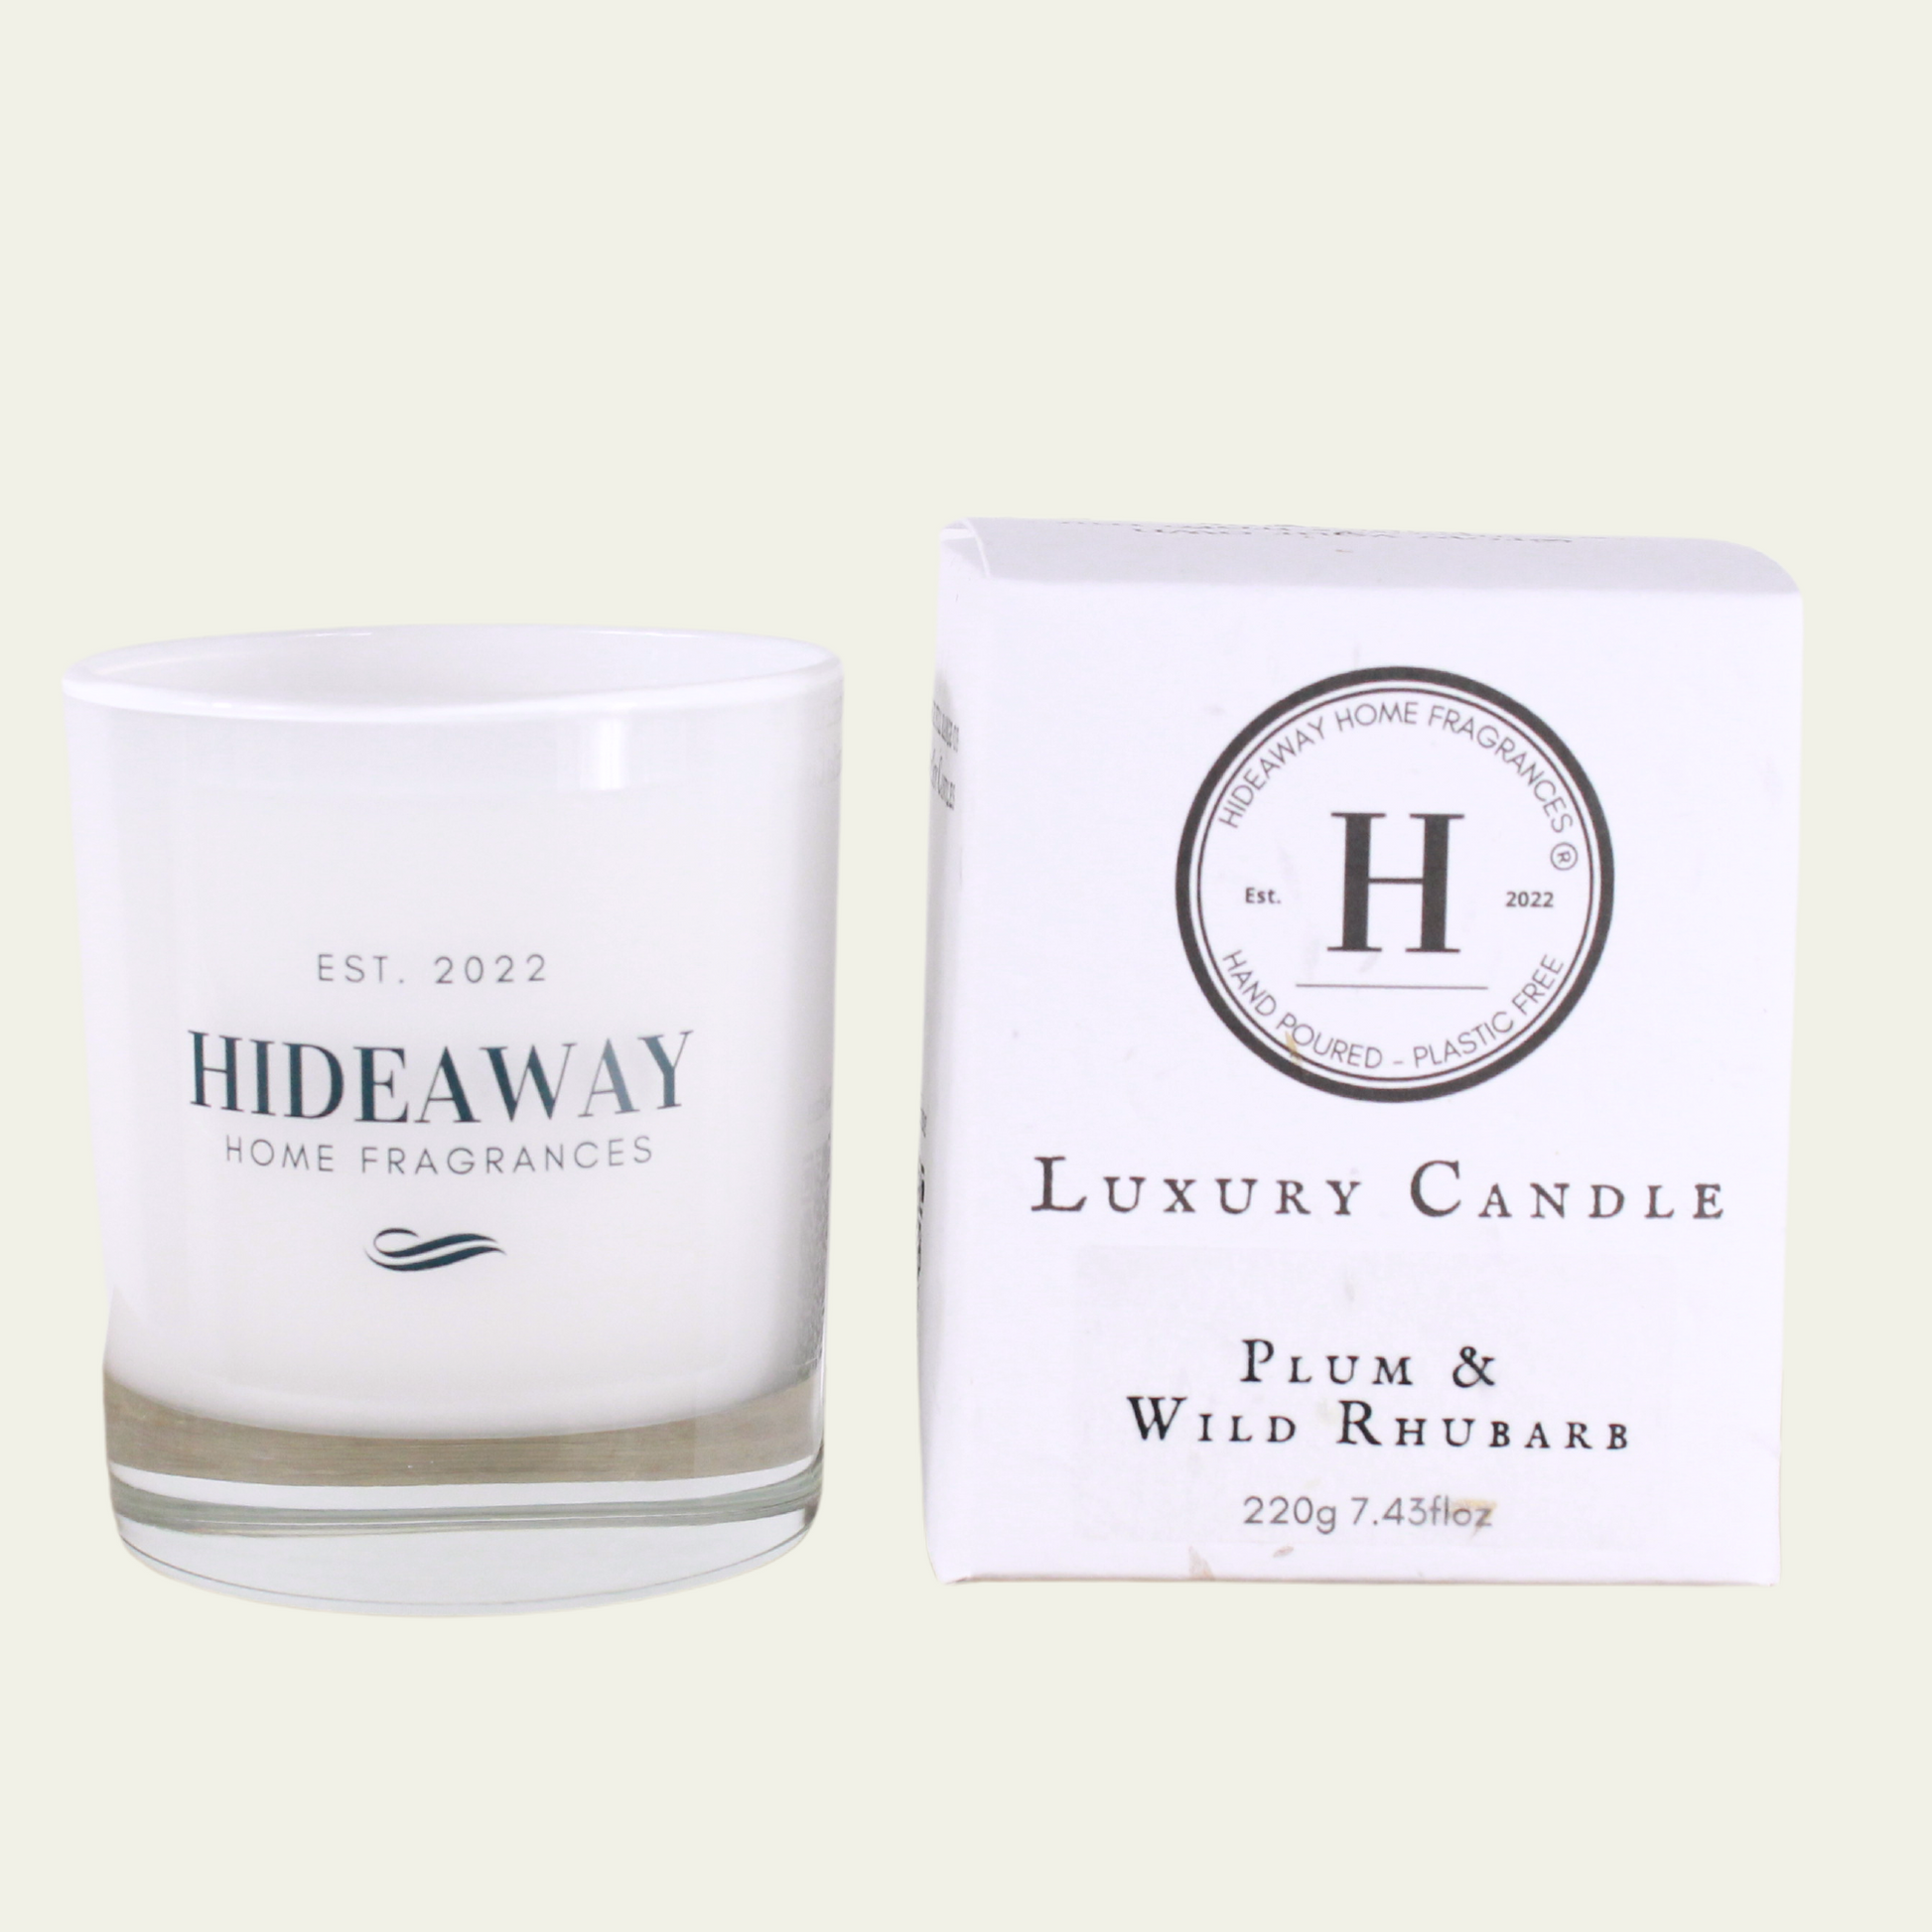 Plum & Wild Rhubarb Luxury Candle - Hideaway Home Fragrances